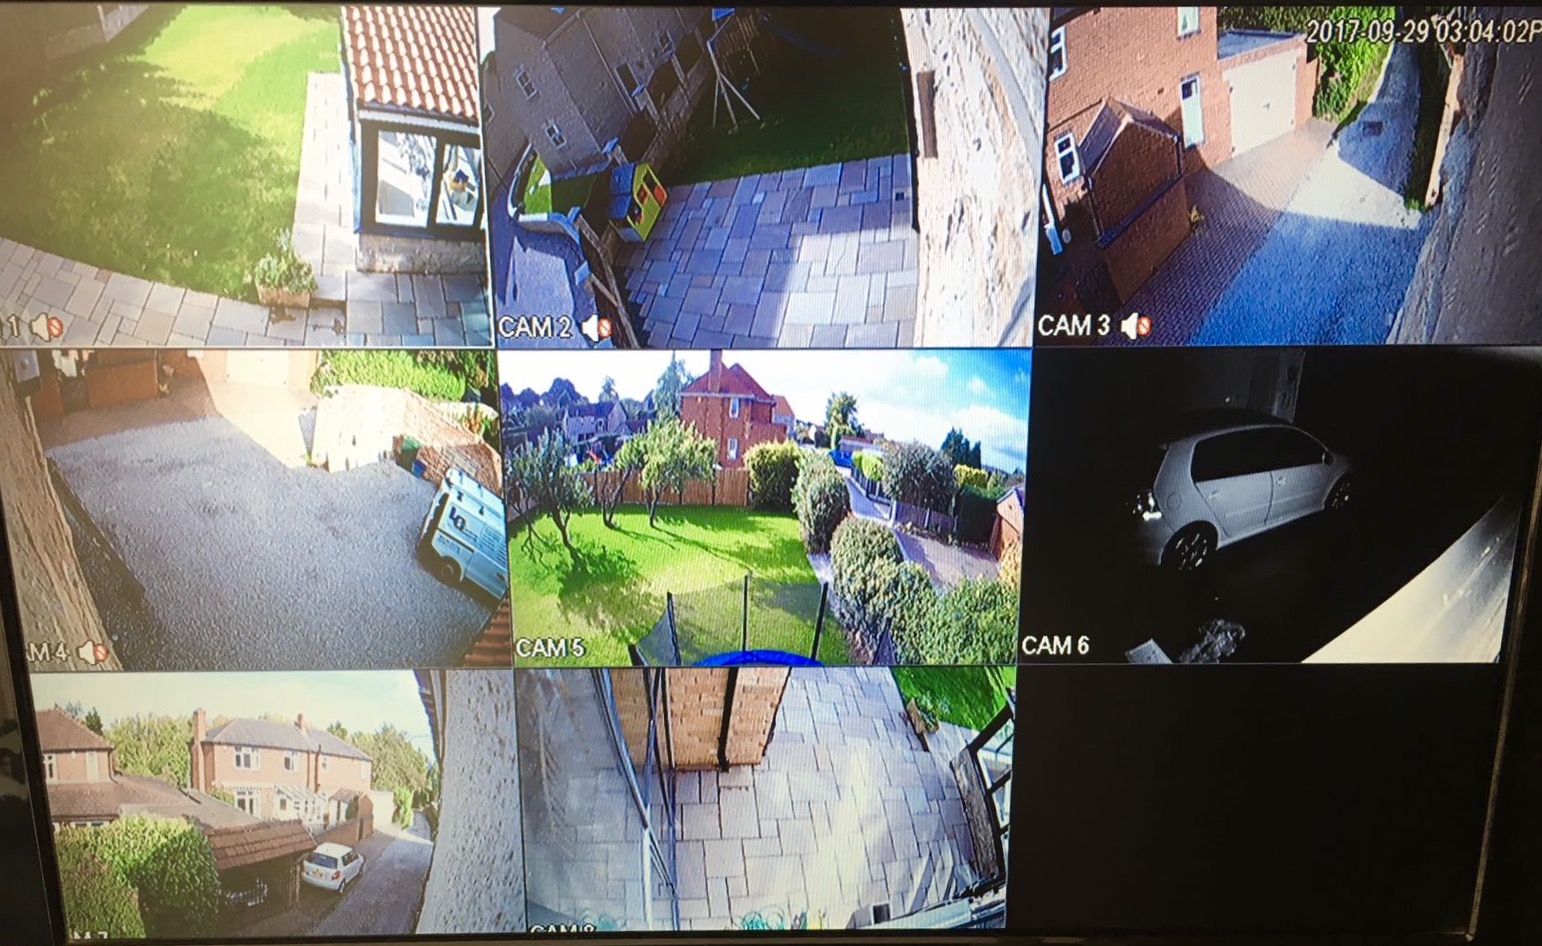 CCTV camera footage